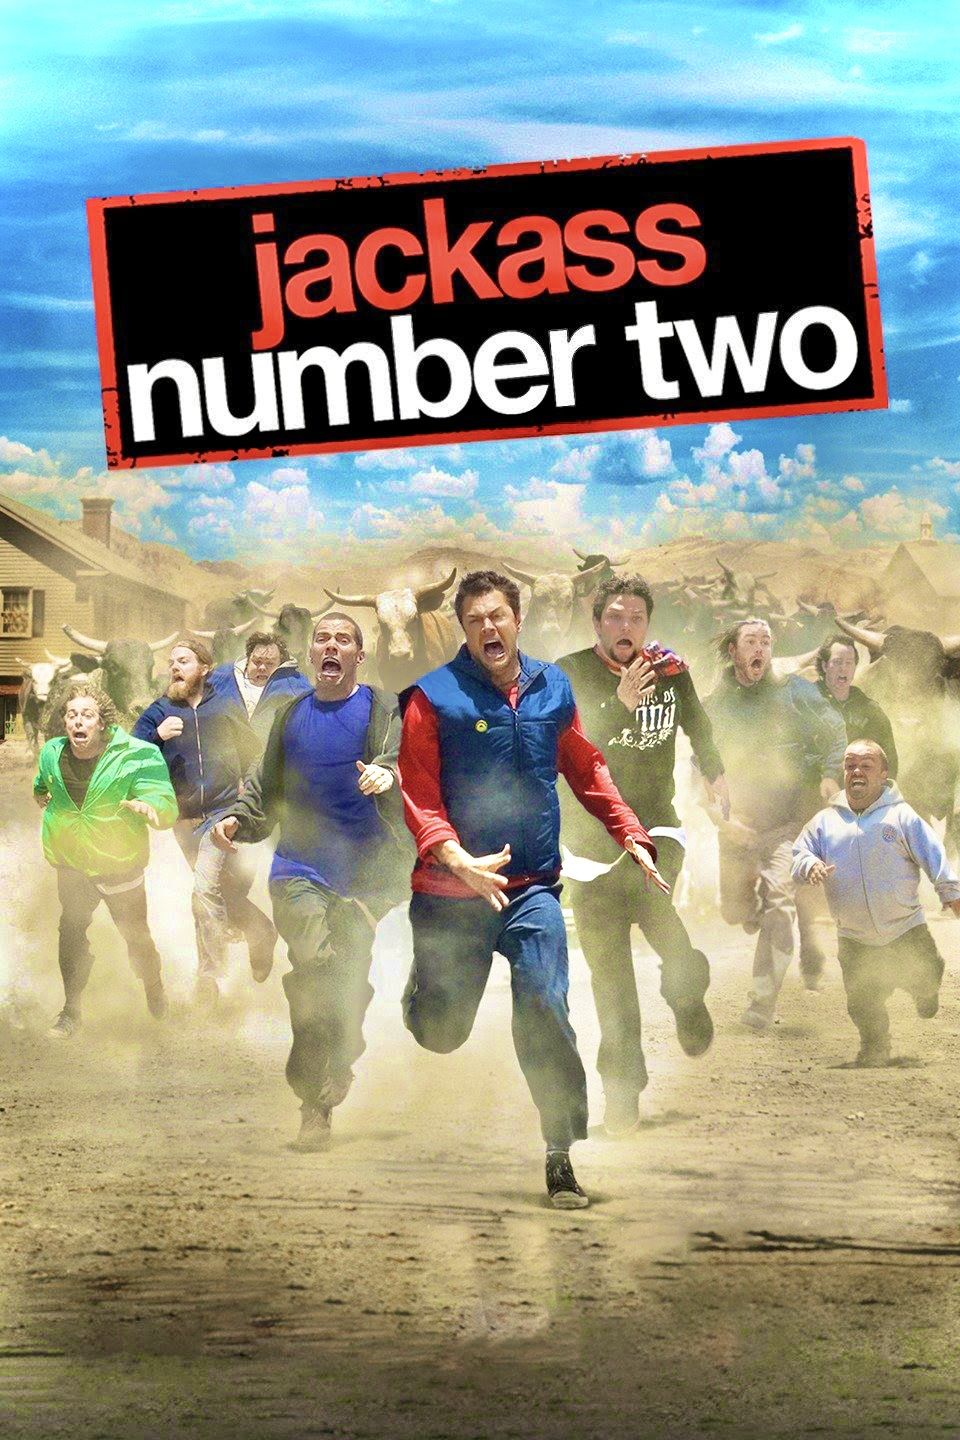 Jackass Numebr 2 poster